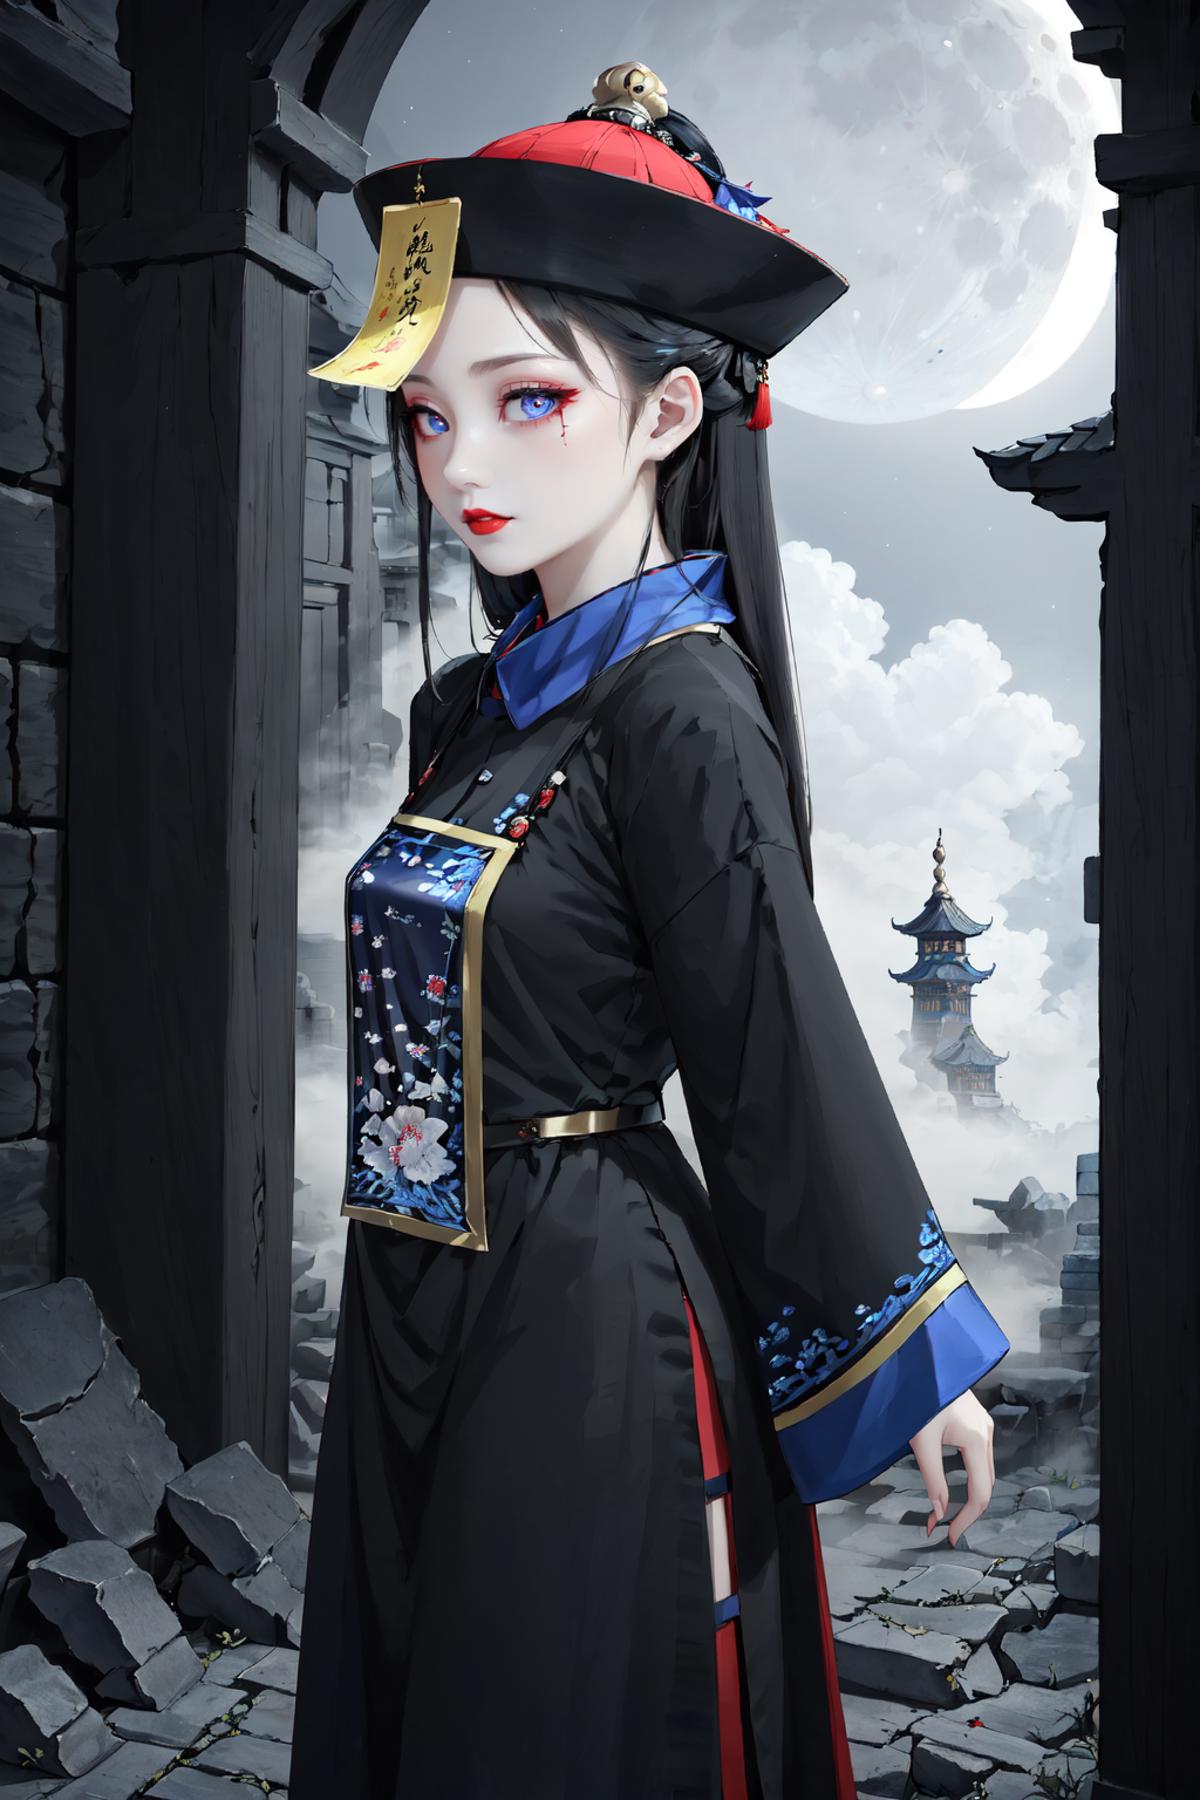 Jiangshi (Chinese zombie) costume image by XSELE